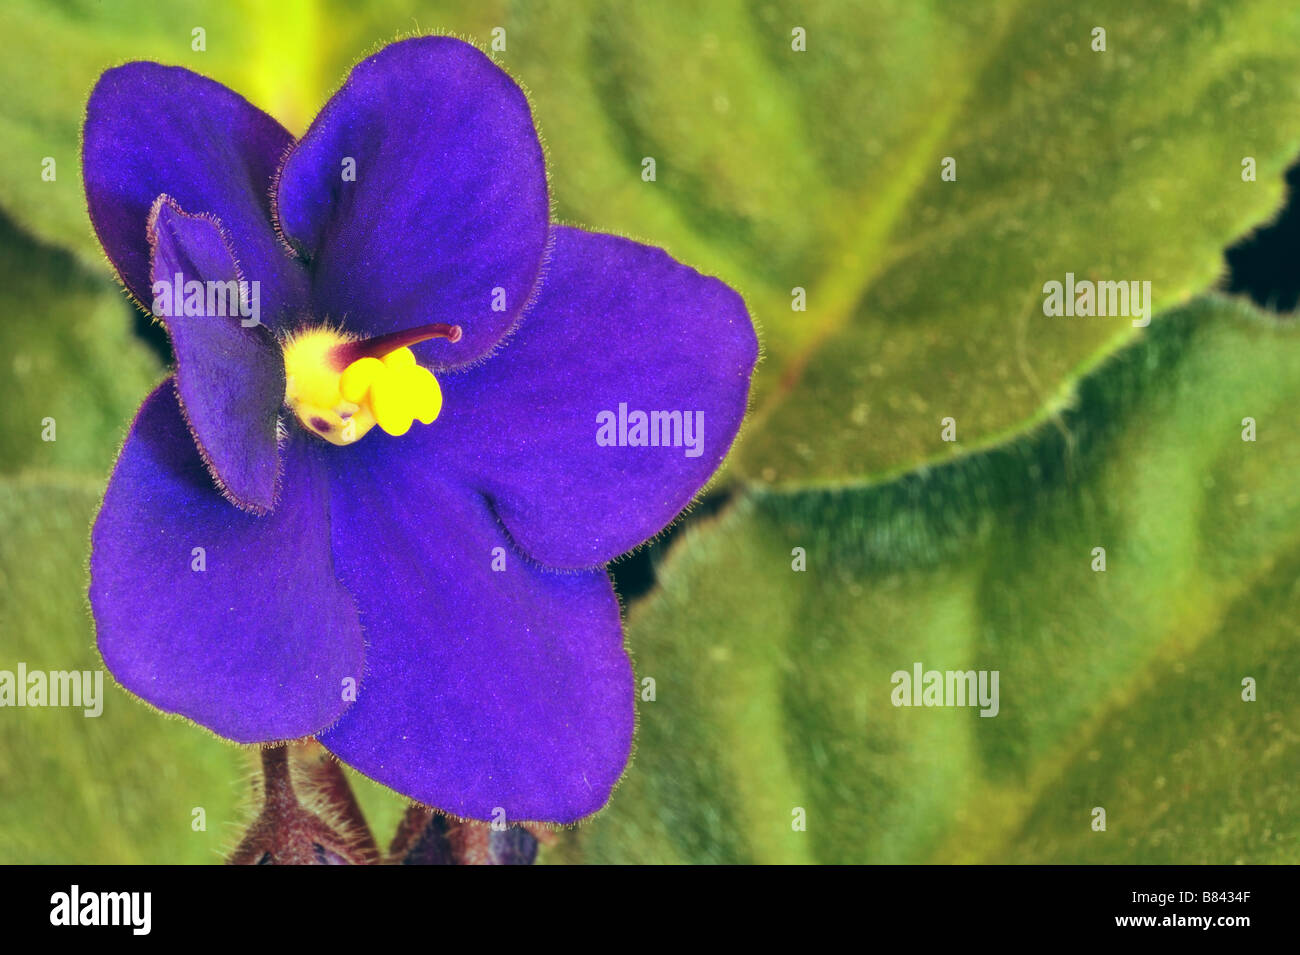 Macro image of an African Violet Saintpaulia flower Stock Photo